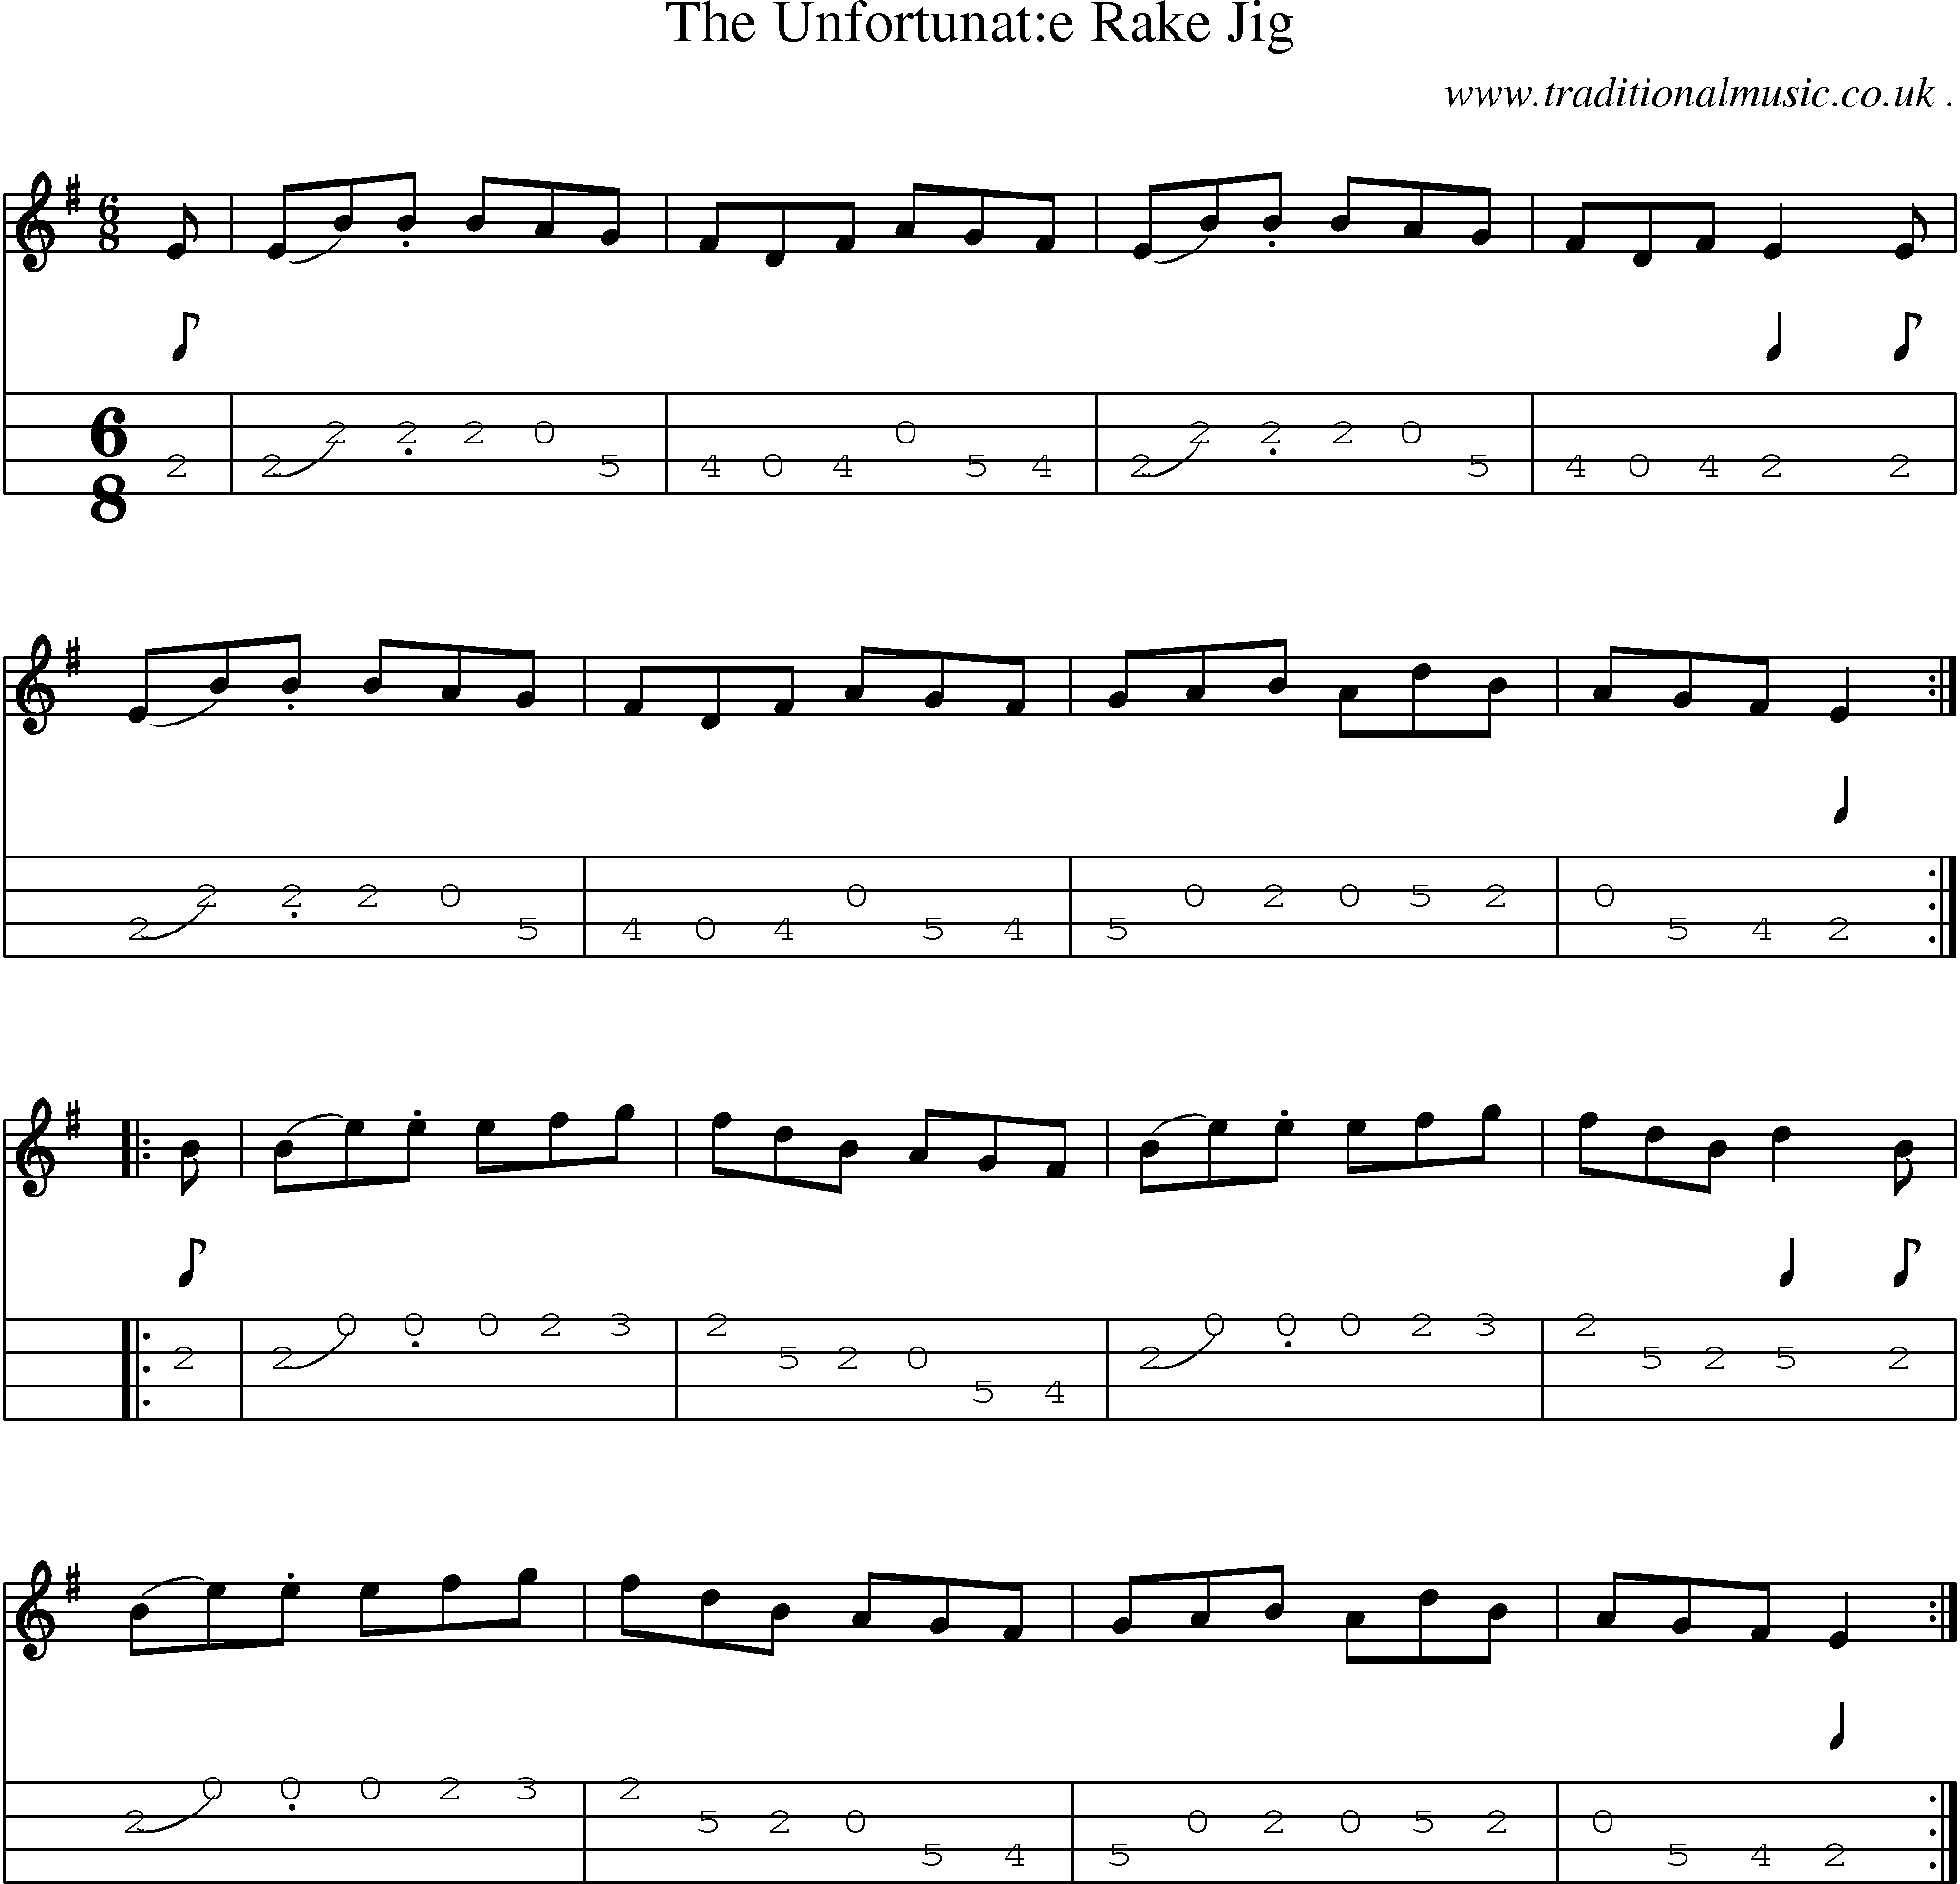 Sheet-Music and Mandolin Tabs for The Unfortunate Rake Jig